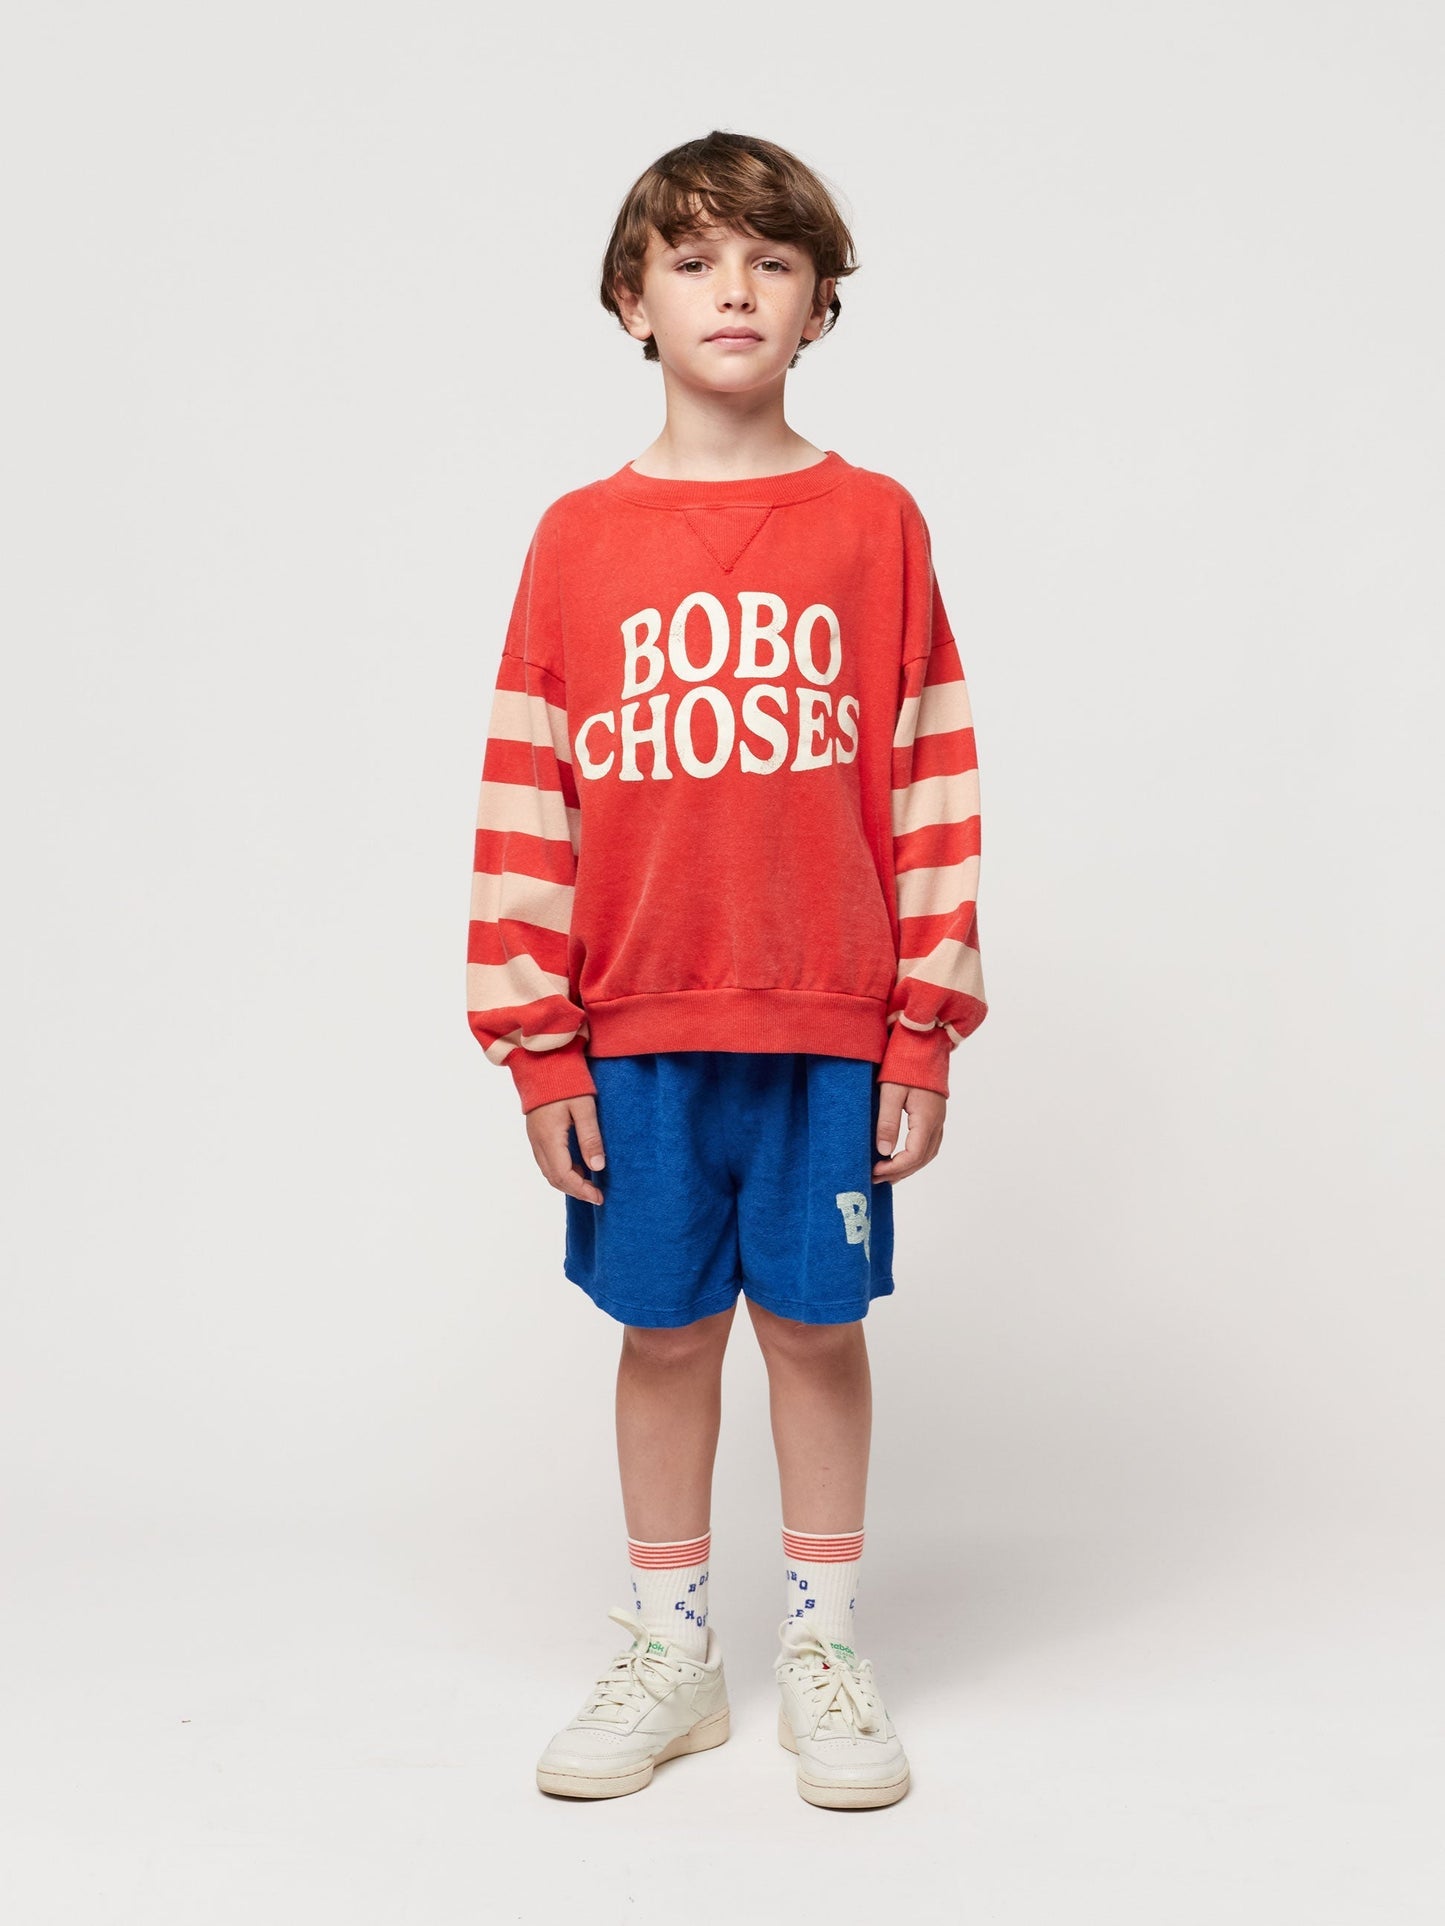 Bobo Choses stripes Sweatshirts